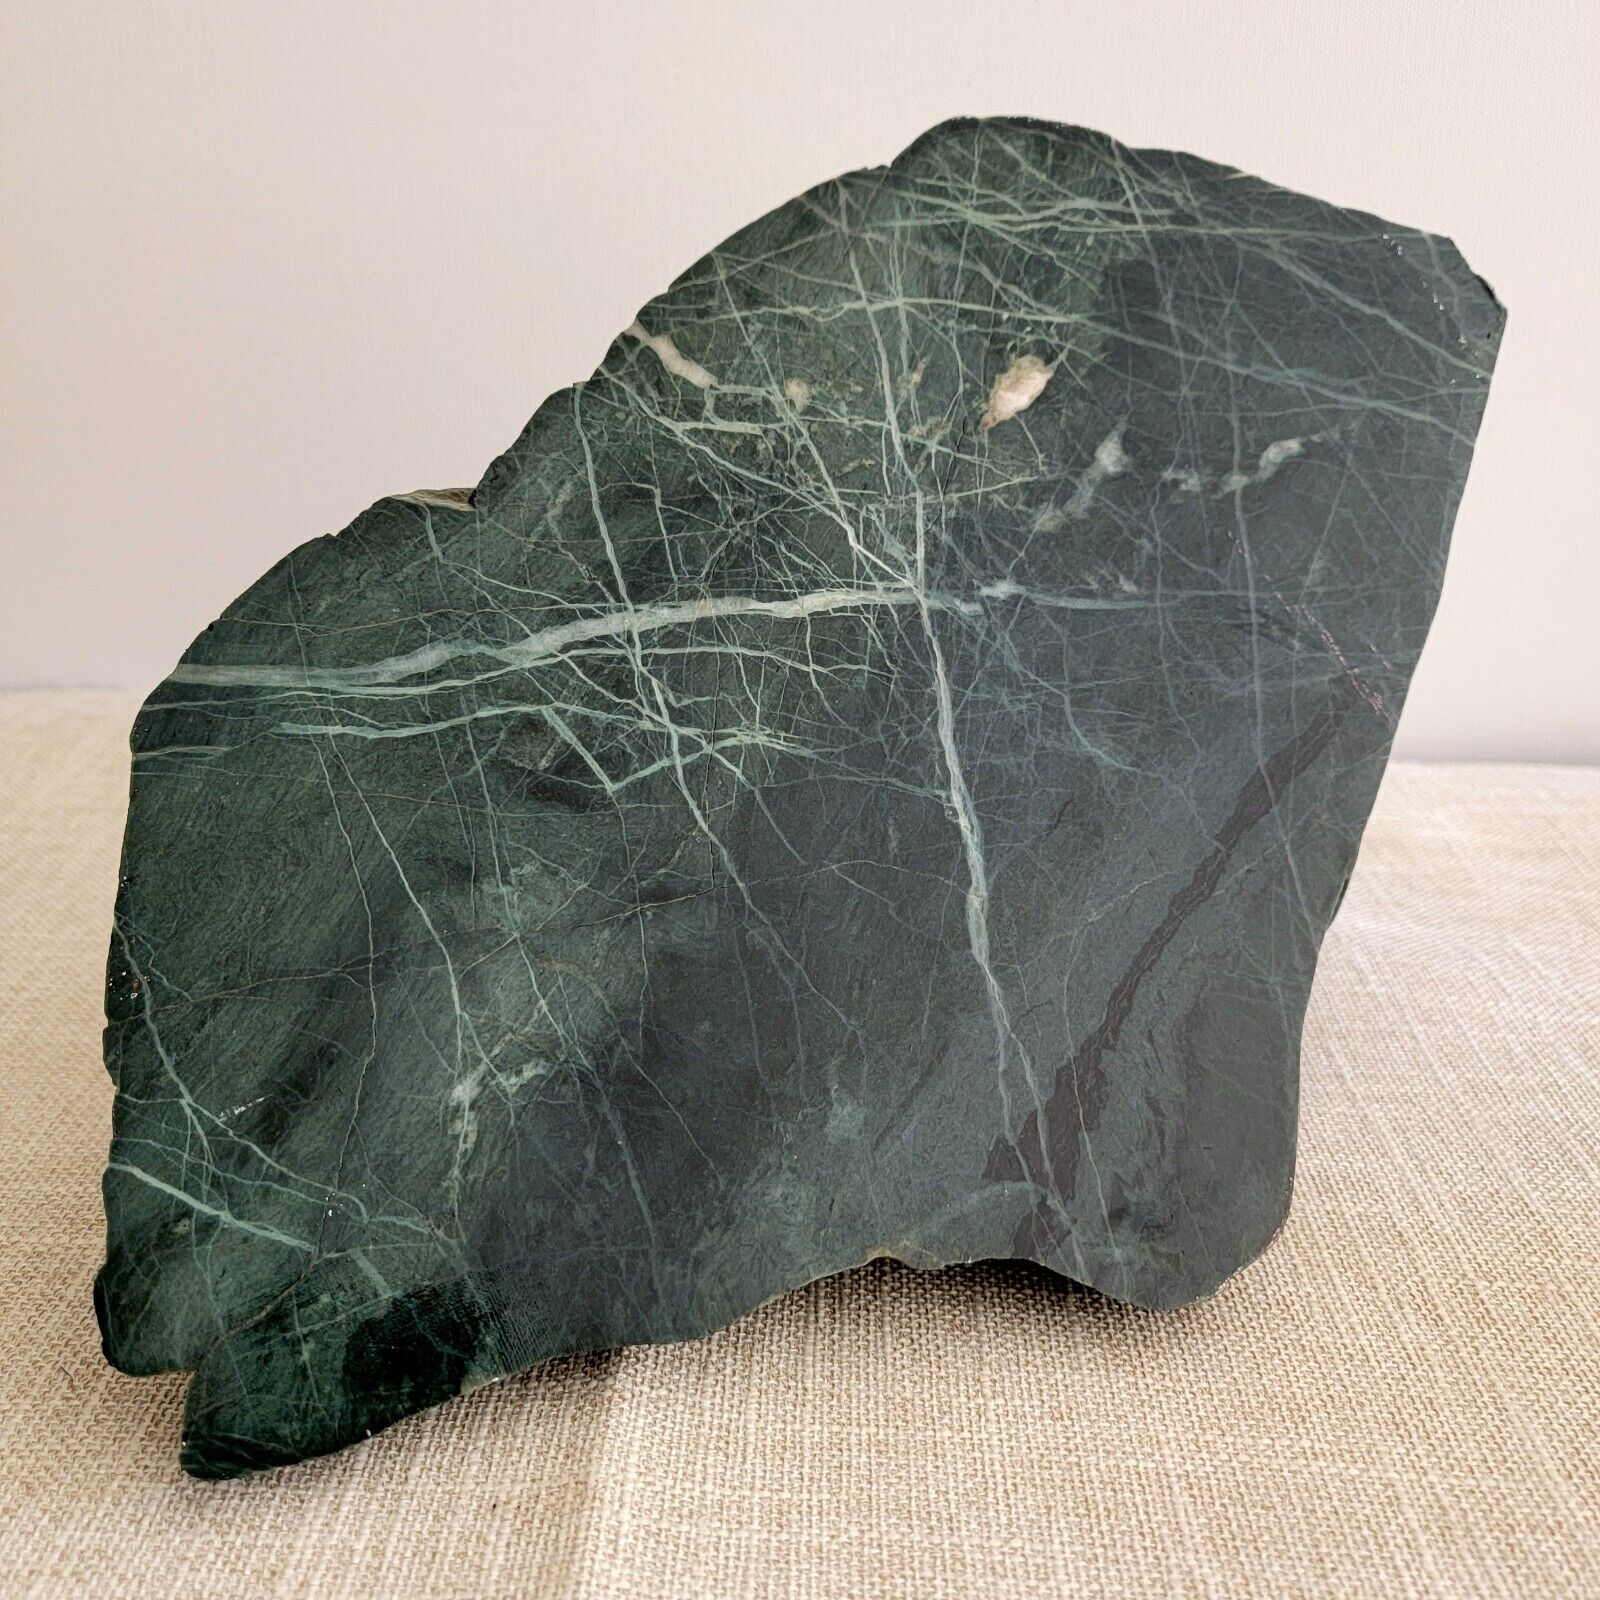 Clear Creek Jadeite Jade Boulder Suiseki Specimen USA Jadeite Rare Shaman Stone